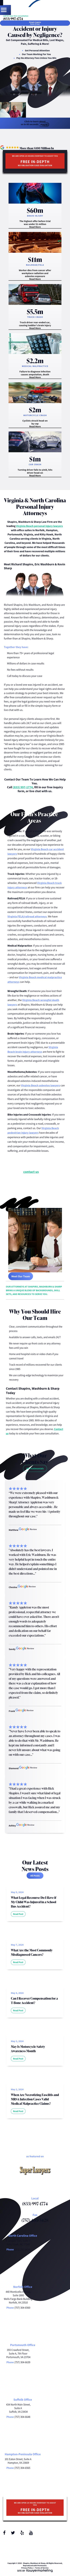 Shapiro, Appleton & Duffan - Virginia Beach VA Lawyers